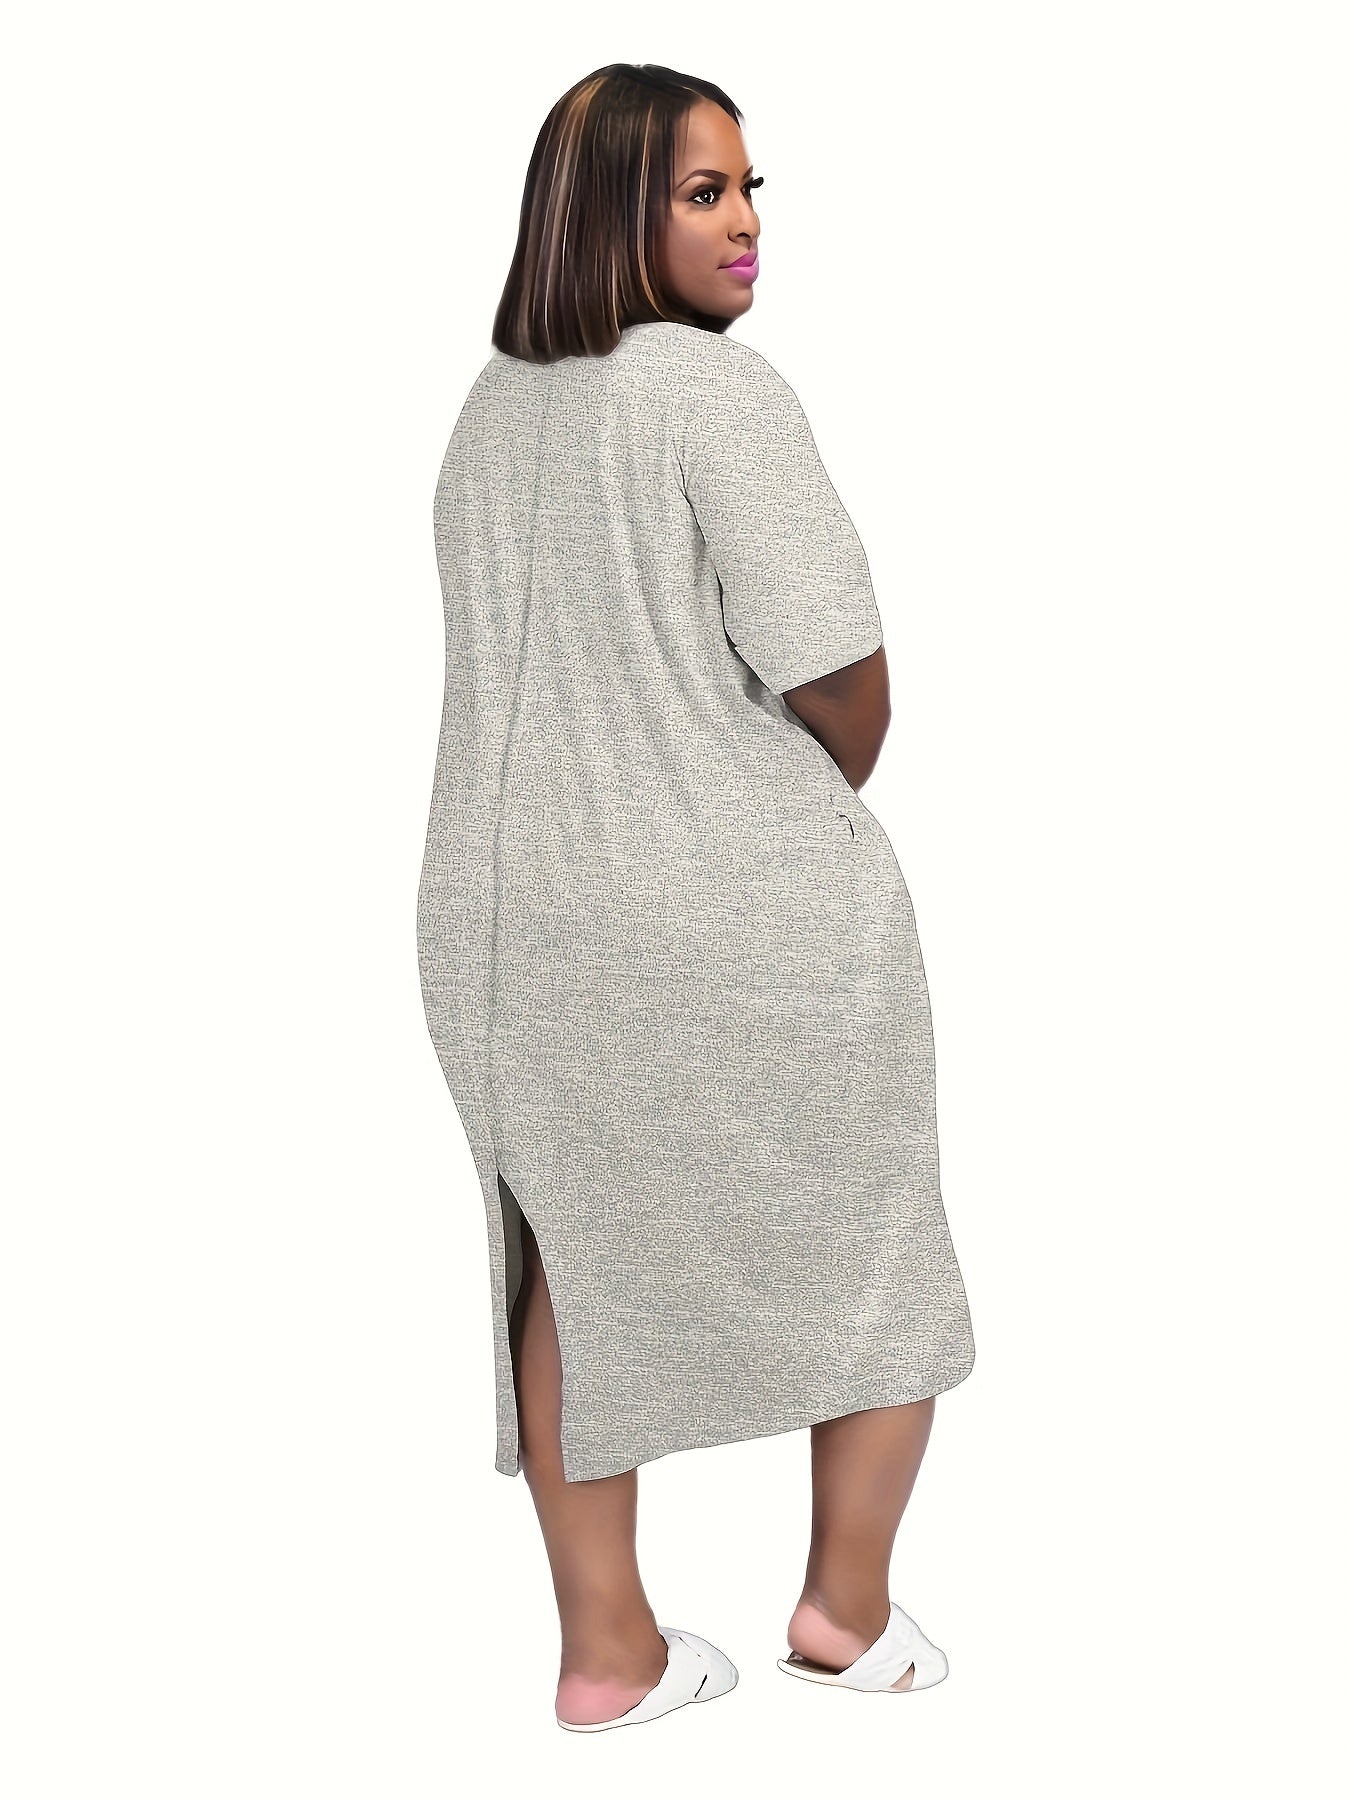 Antmvs Plus Size Figure & Letter Print Short Sleeve Tee Dress, Women's Plus Slight Stretch Casual Tee Dress